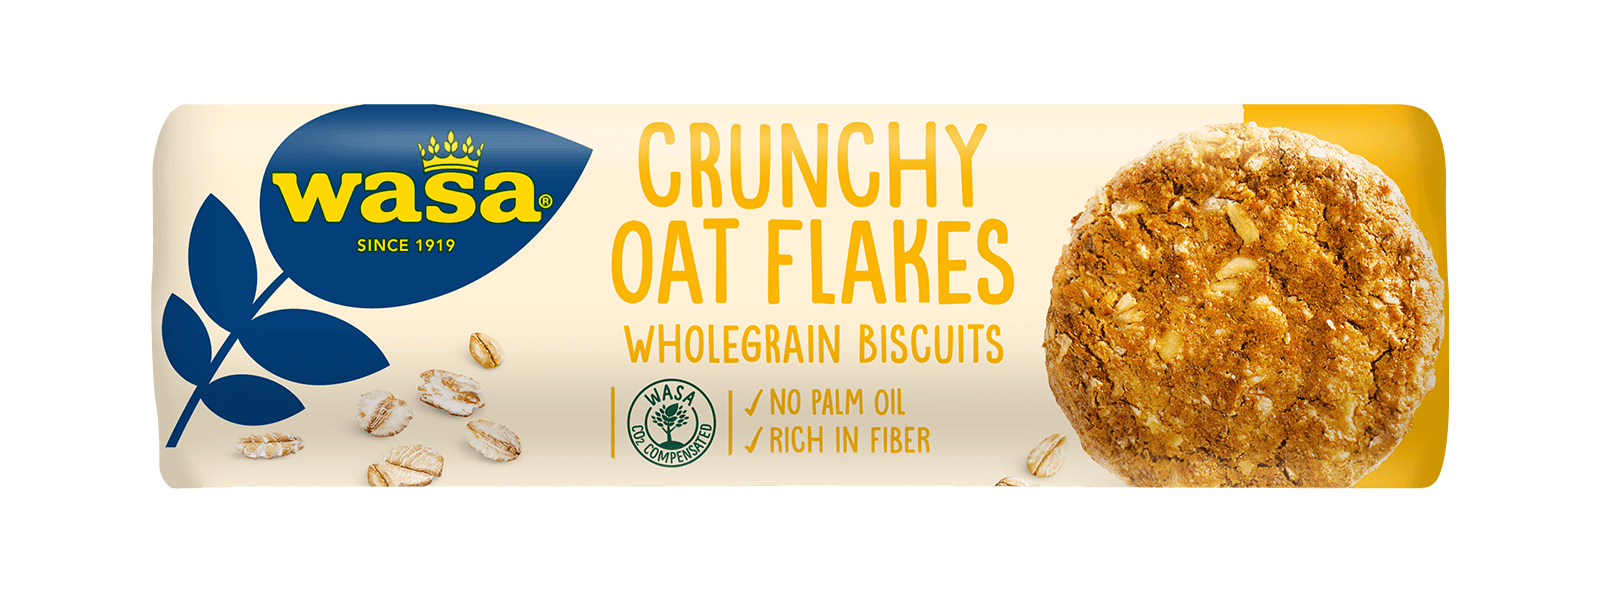 Crunchy Oat Flakes